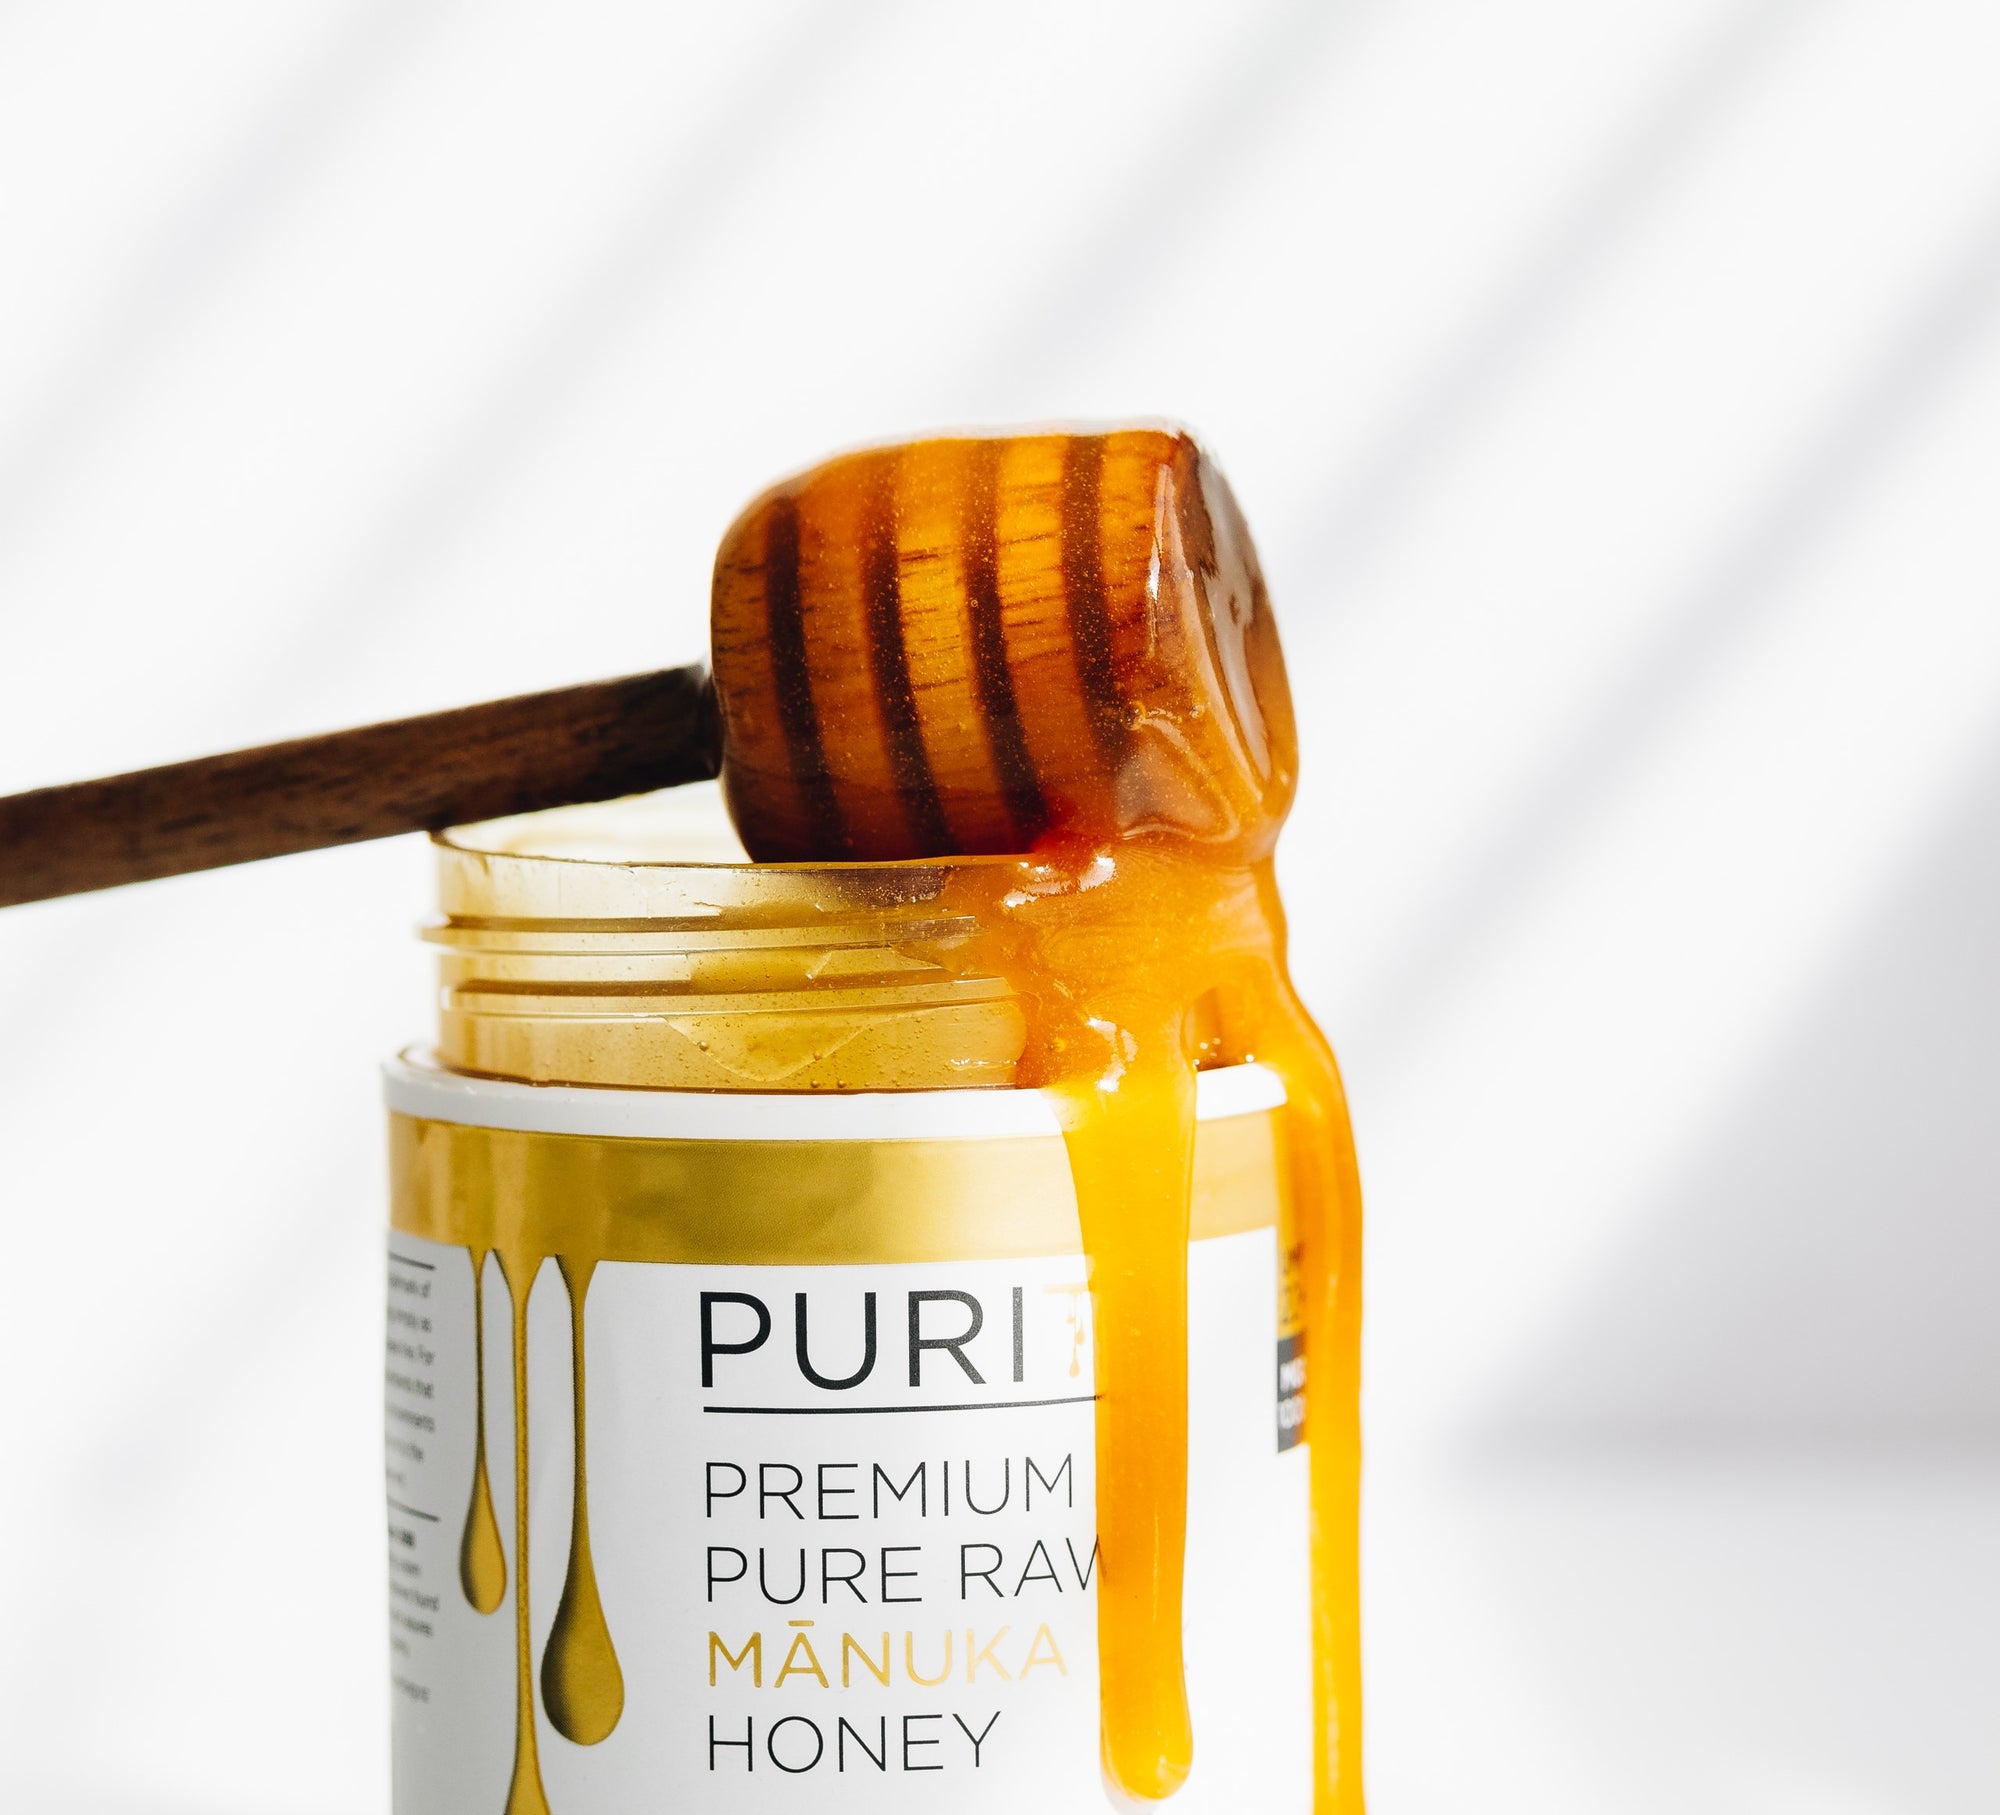 PURITI Genuine Manuka Honey Queen Bee Bundle featuring UMF Certified Honey Jar, Lozenges and Snap Packs